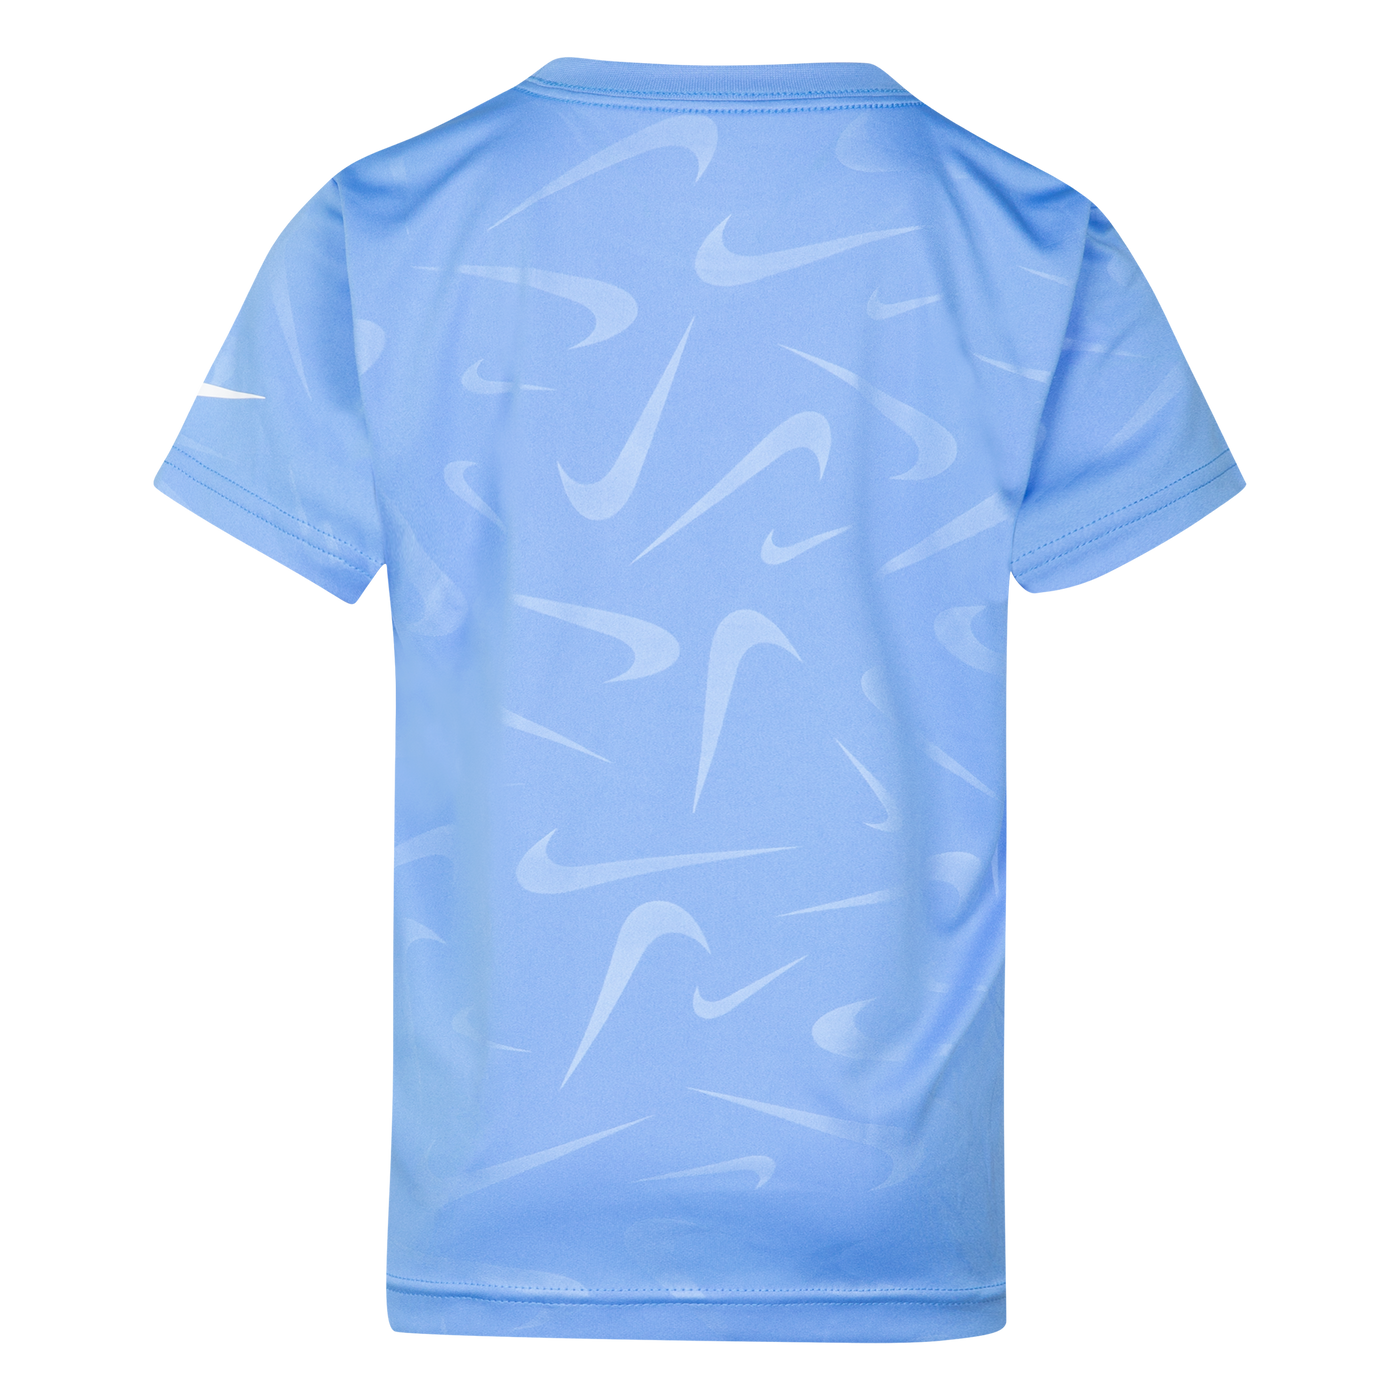 Nike Swooshfetti Debossed Dri-FIT Tee T Shirt Nike   